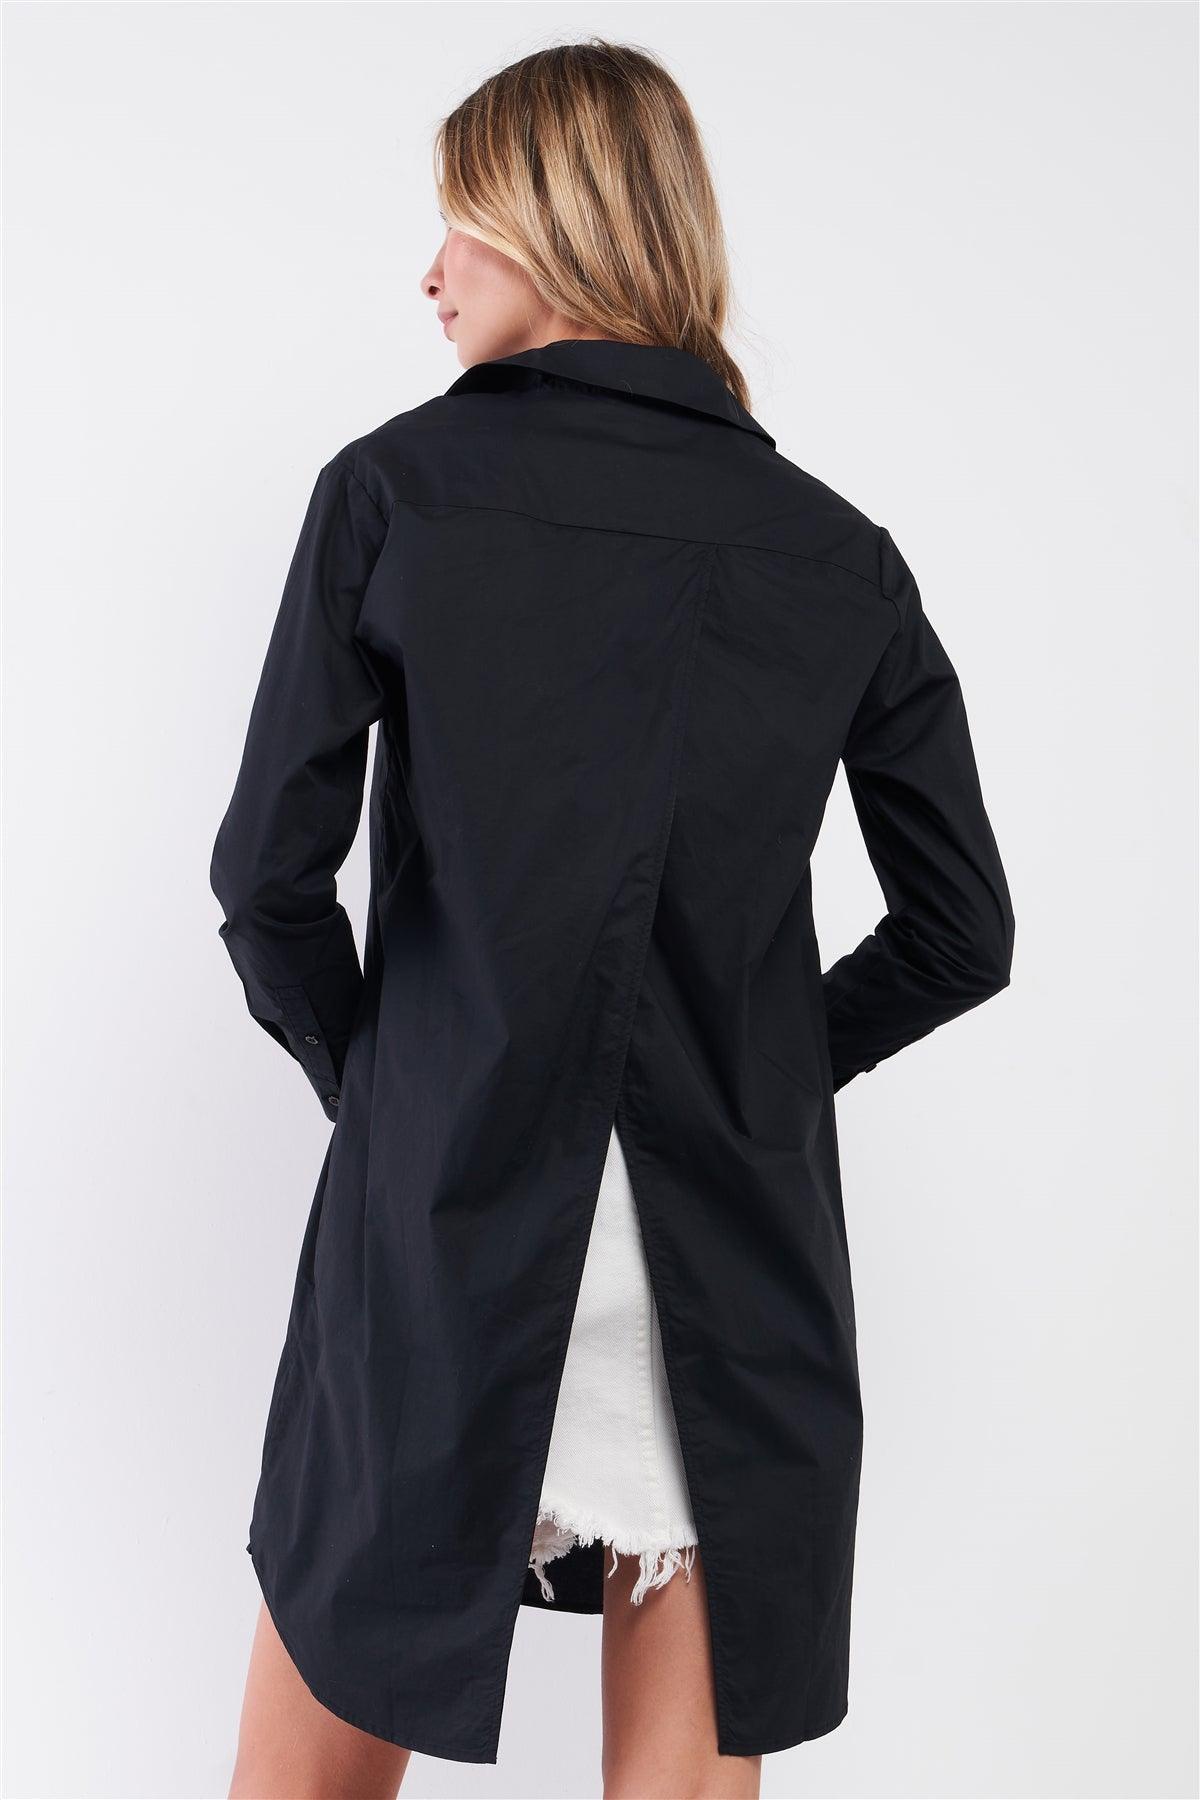 Solid Black Cotton Long Sleeve Front Button Down Back Slit Dress-Shirt Top /1-2-2